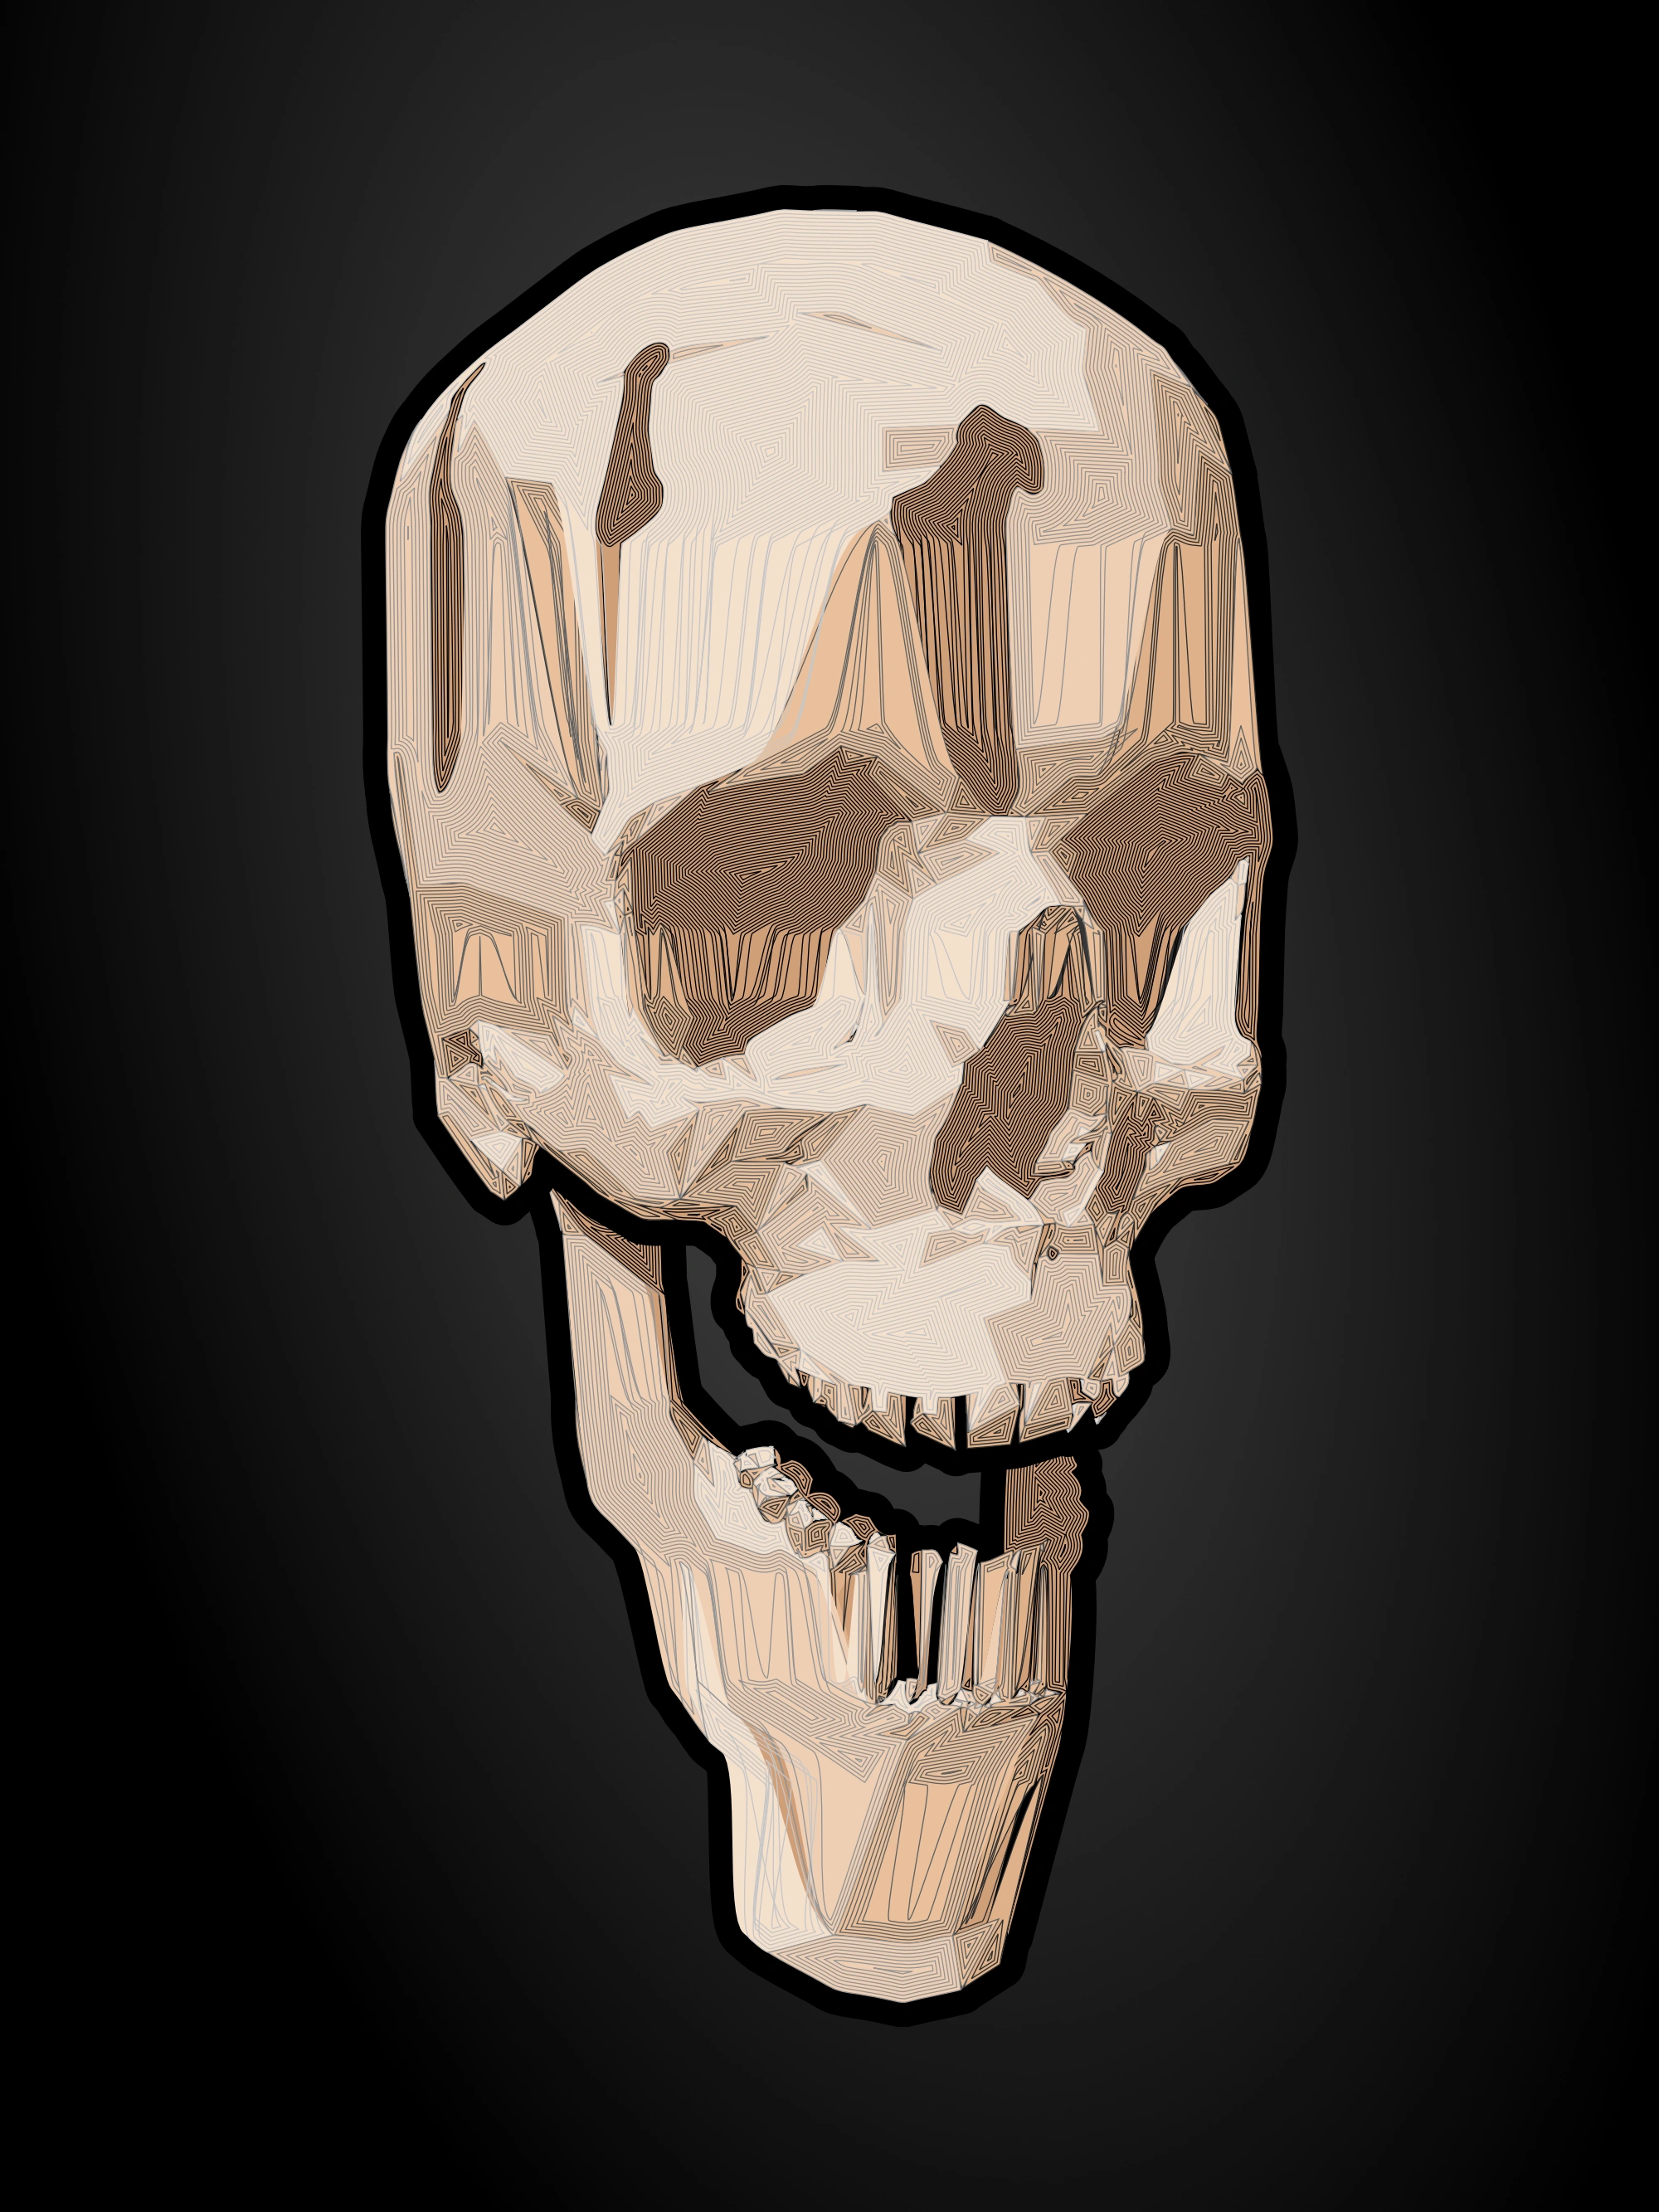 A glitched elongated human skull